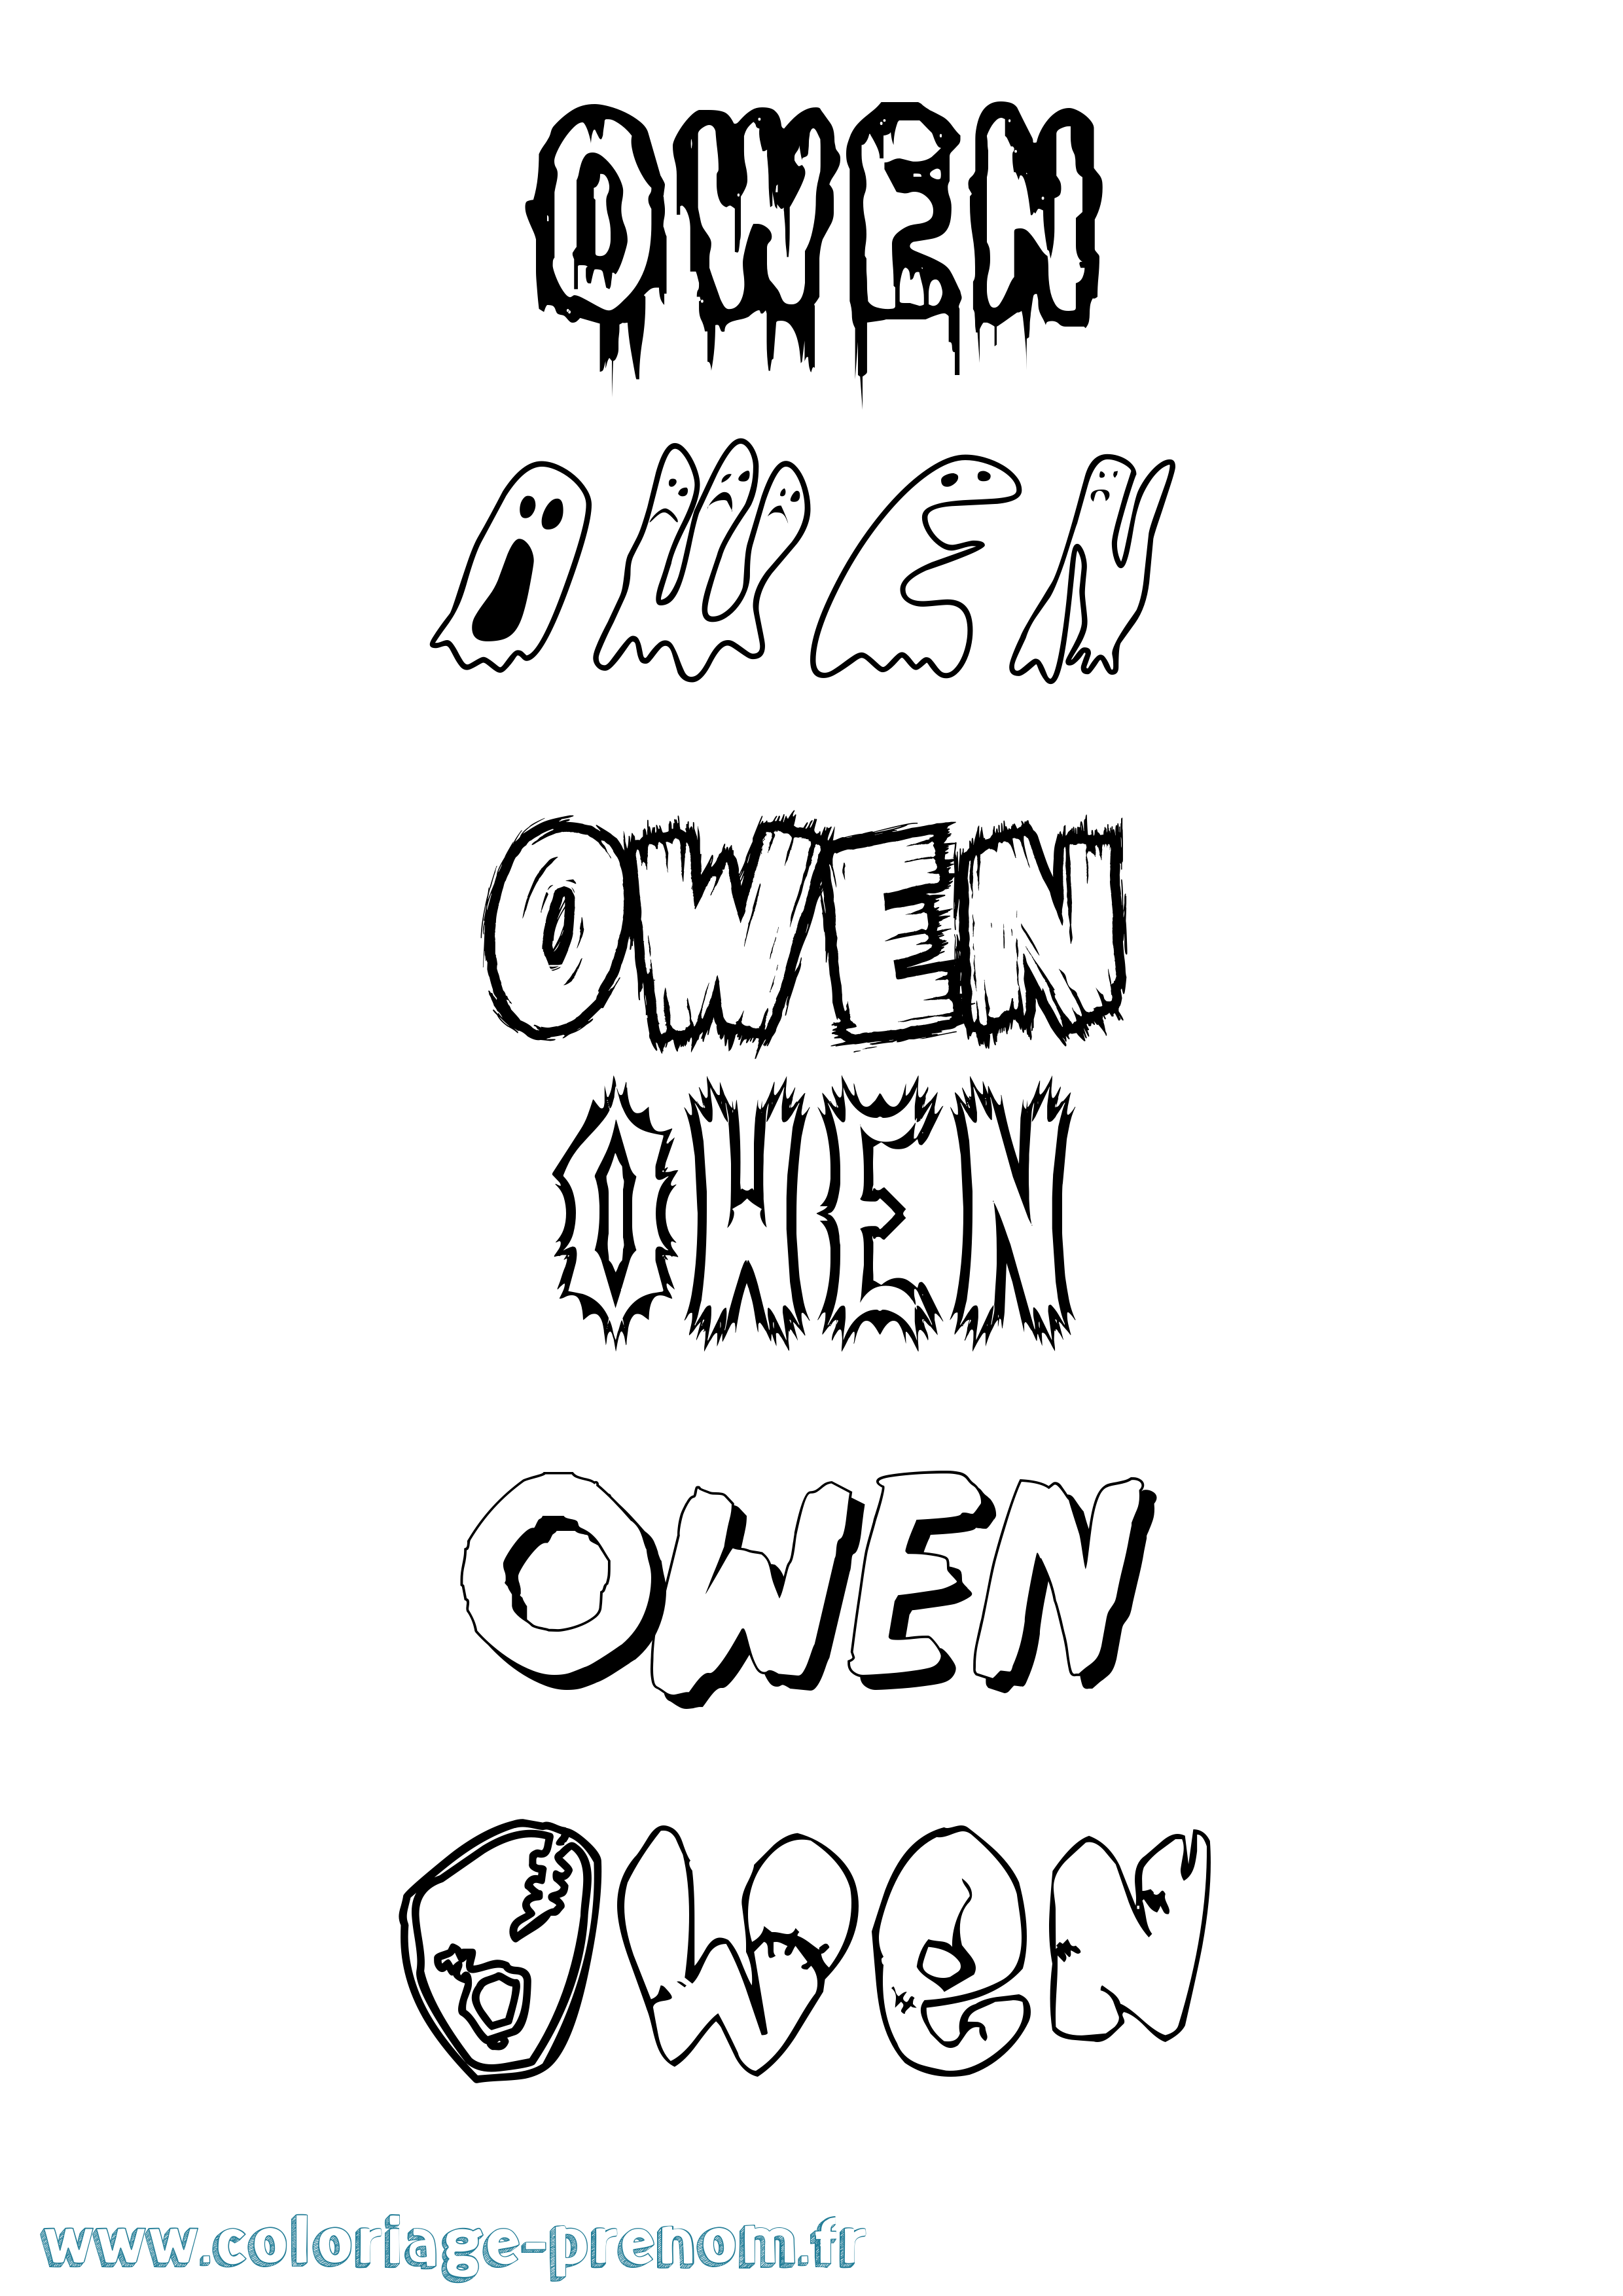 Coloriage prénom Owen